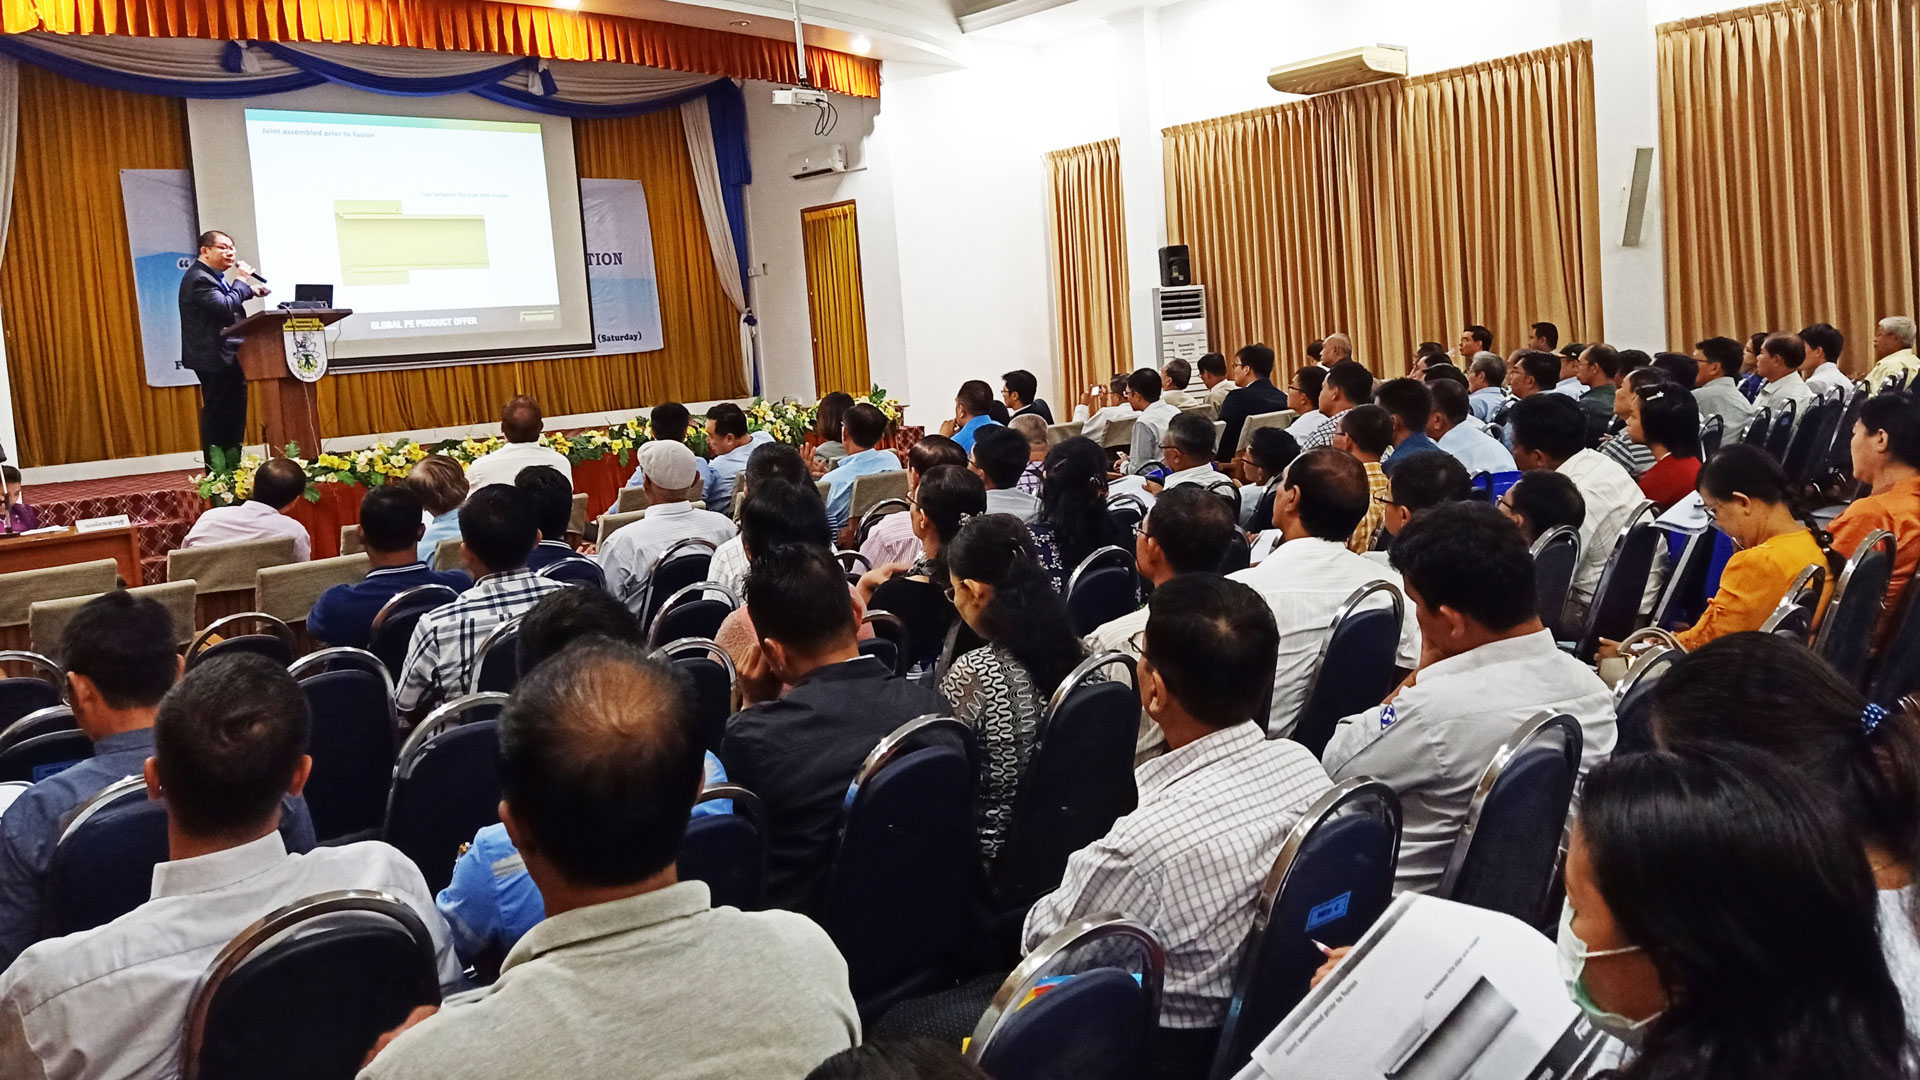 Seow Kok Hooi AWT Fusion Malaysia delivers presentation to Myanmar Engineering Society